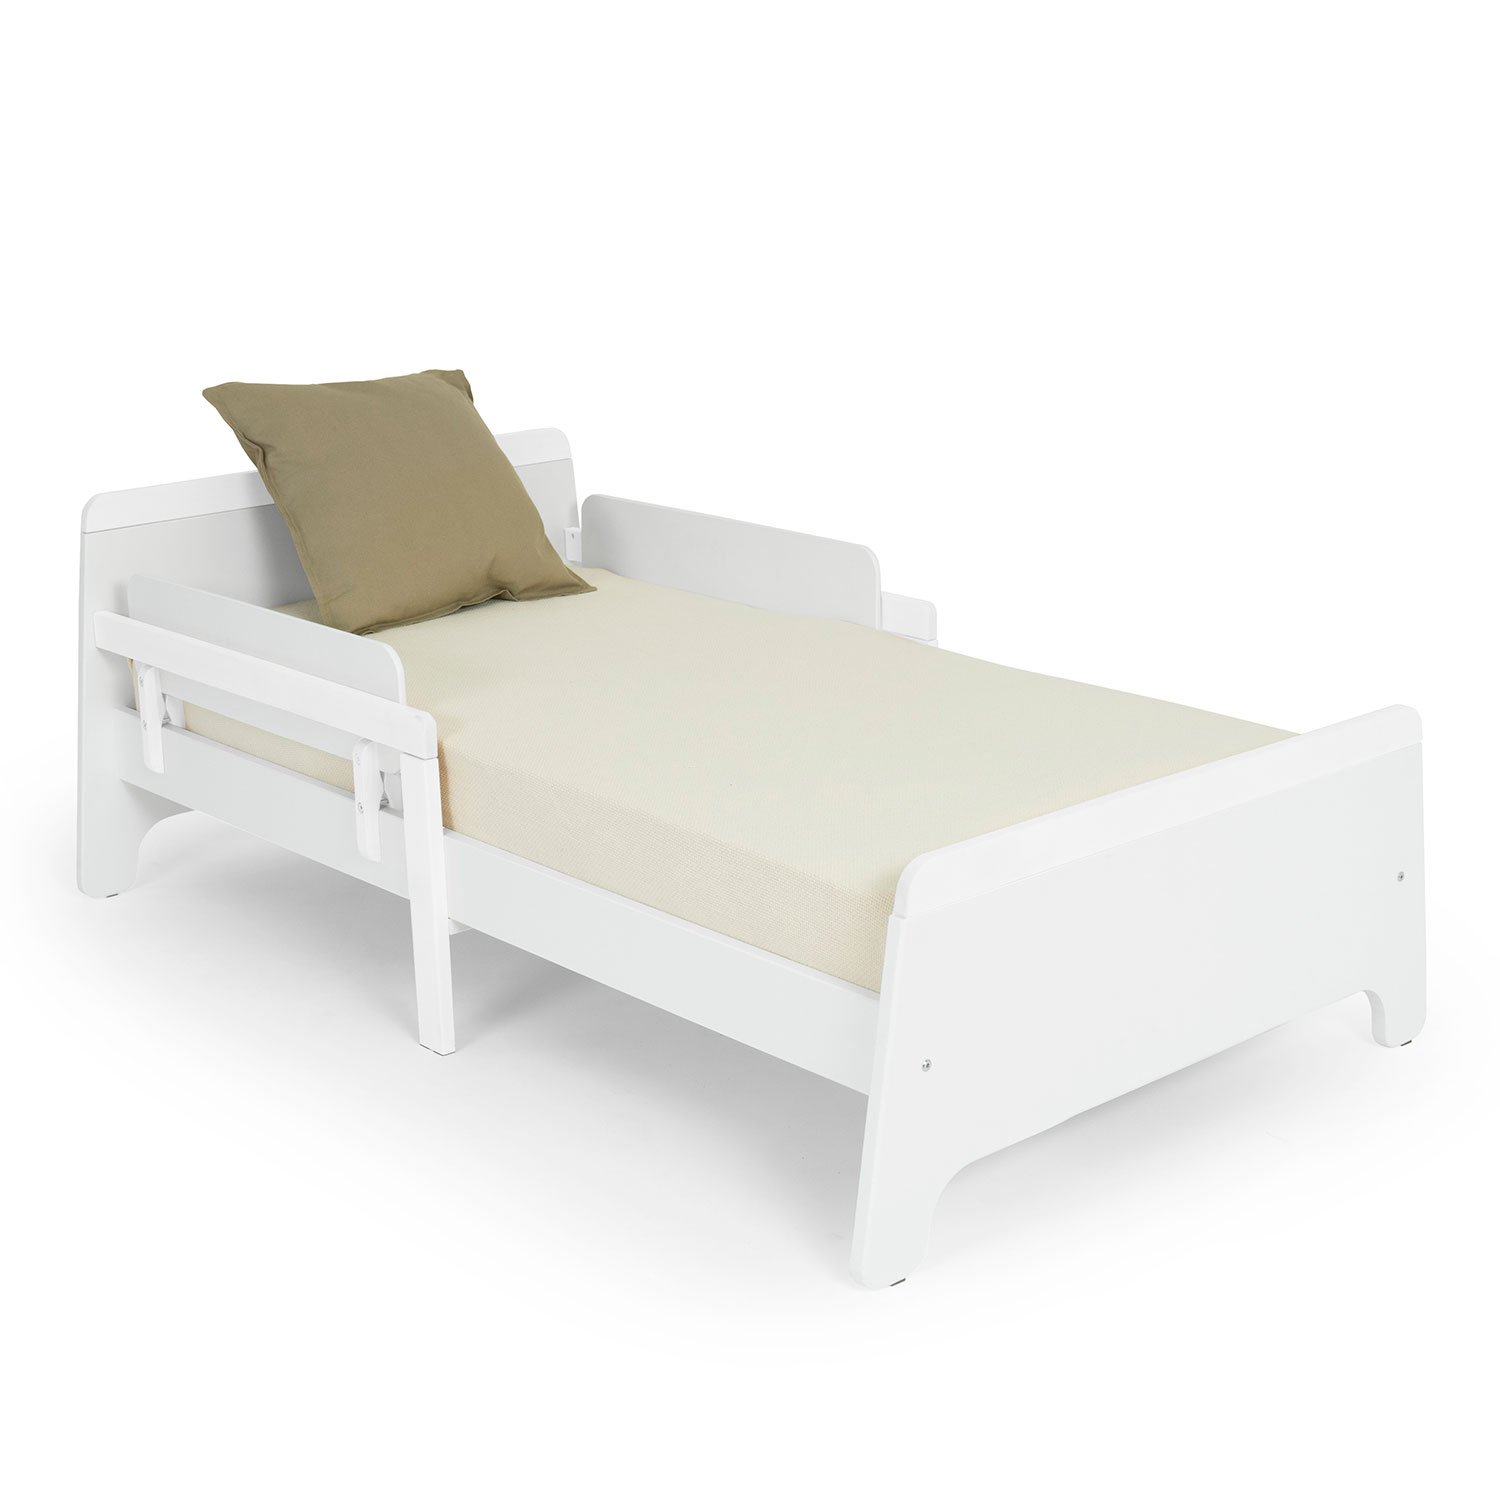 Подростковая кровать Nuovita Stanzione Nave lungo (Белый, Снежная береза) кроватка подростковая unika 160х80 см белый